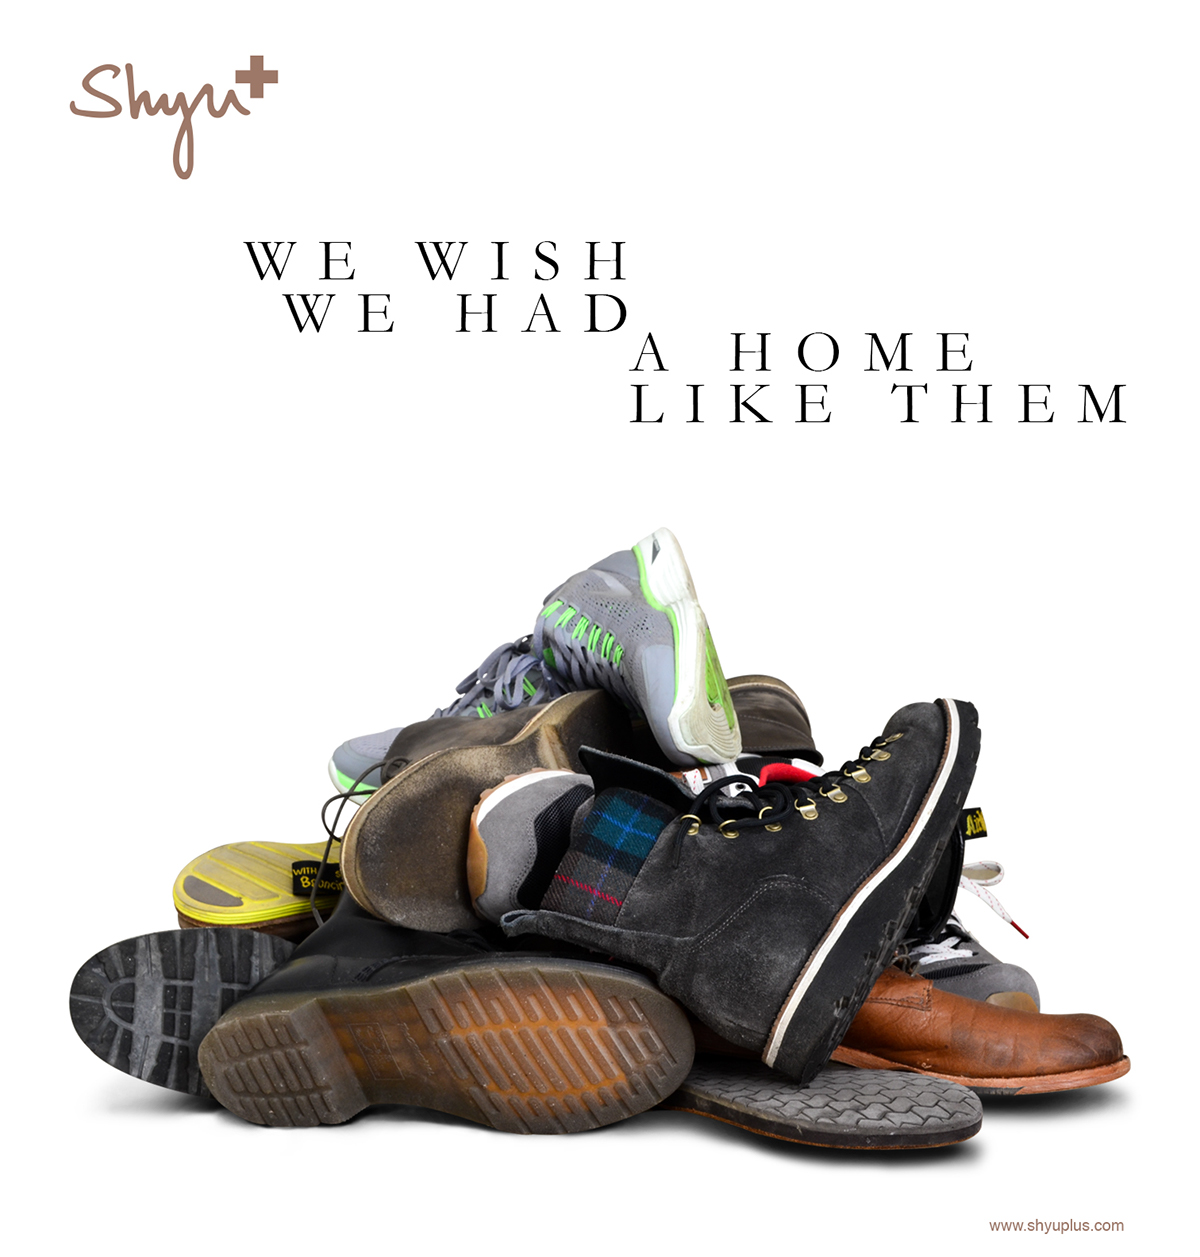 shyu plus modular shoe rack designer graphic design furniture product